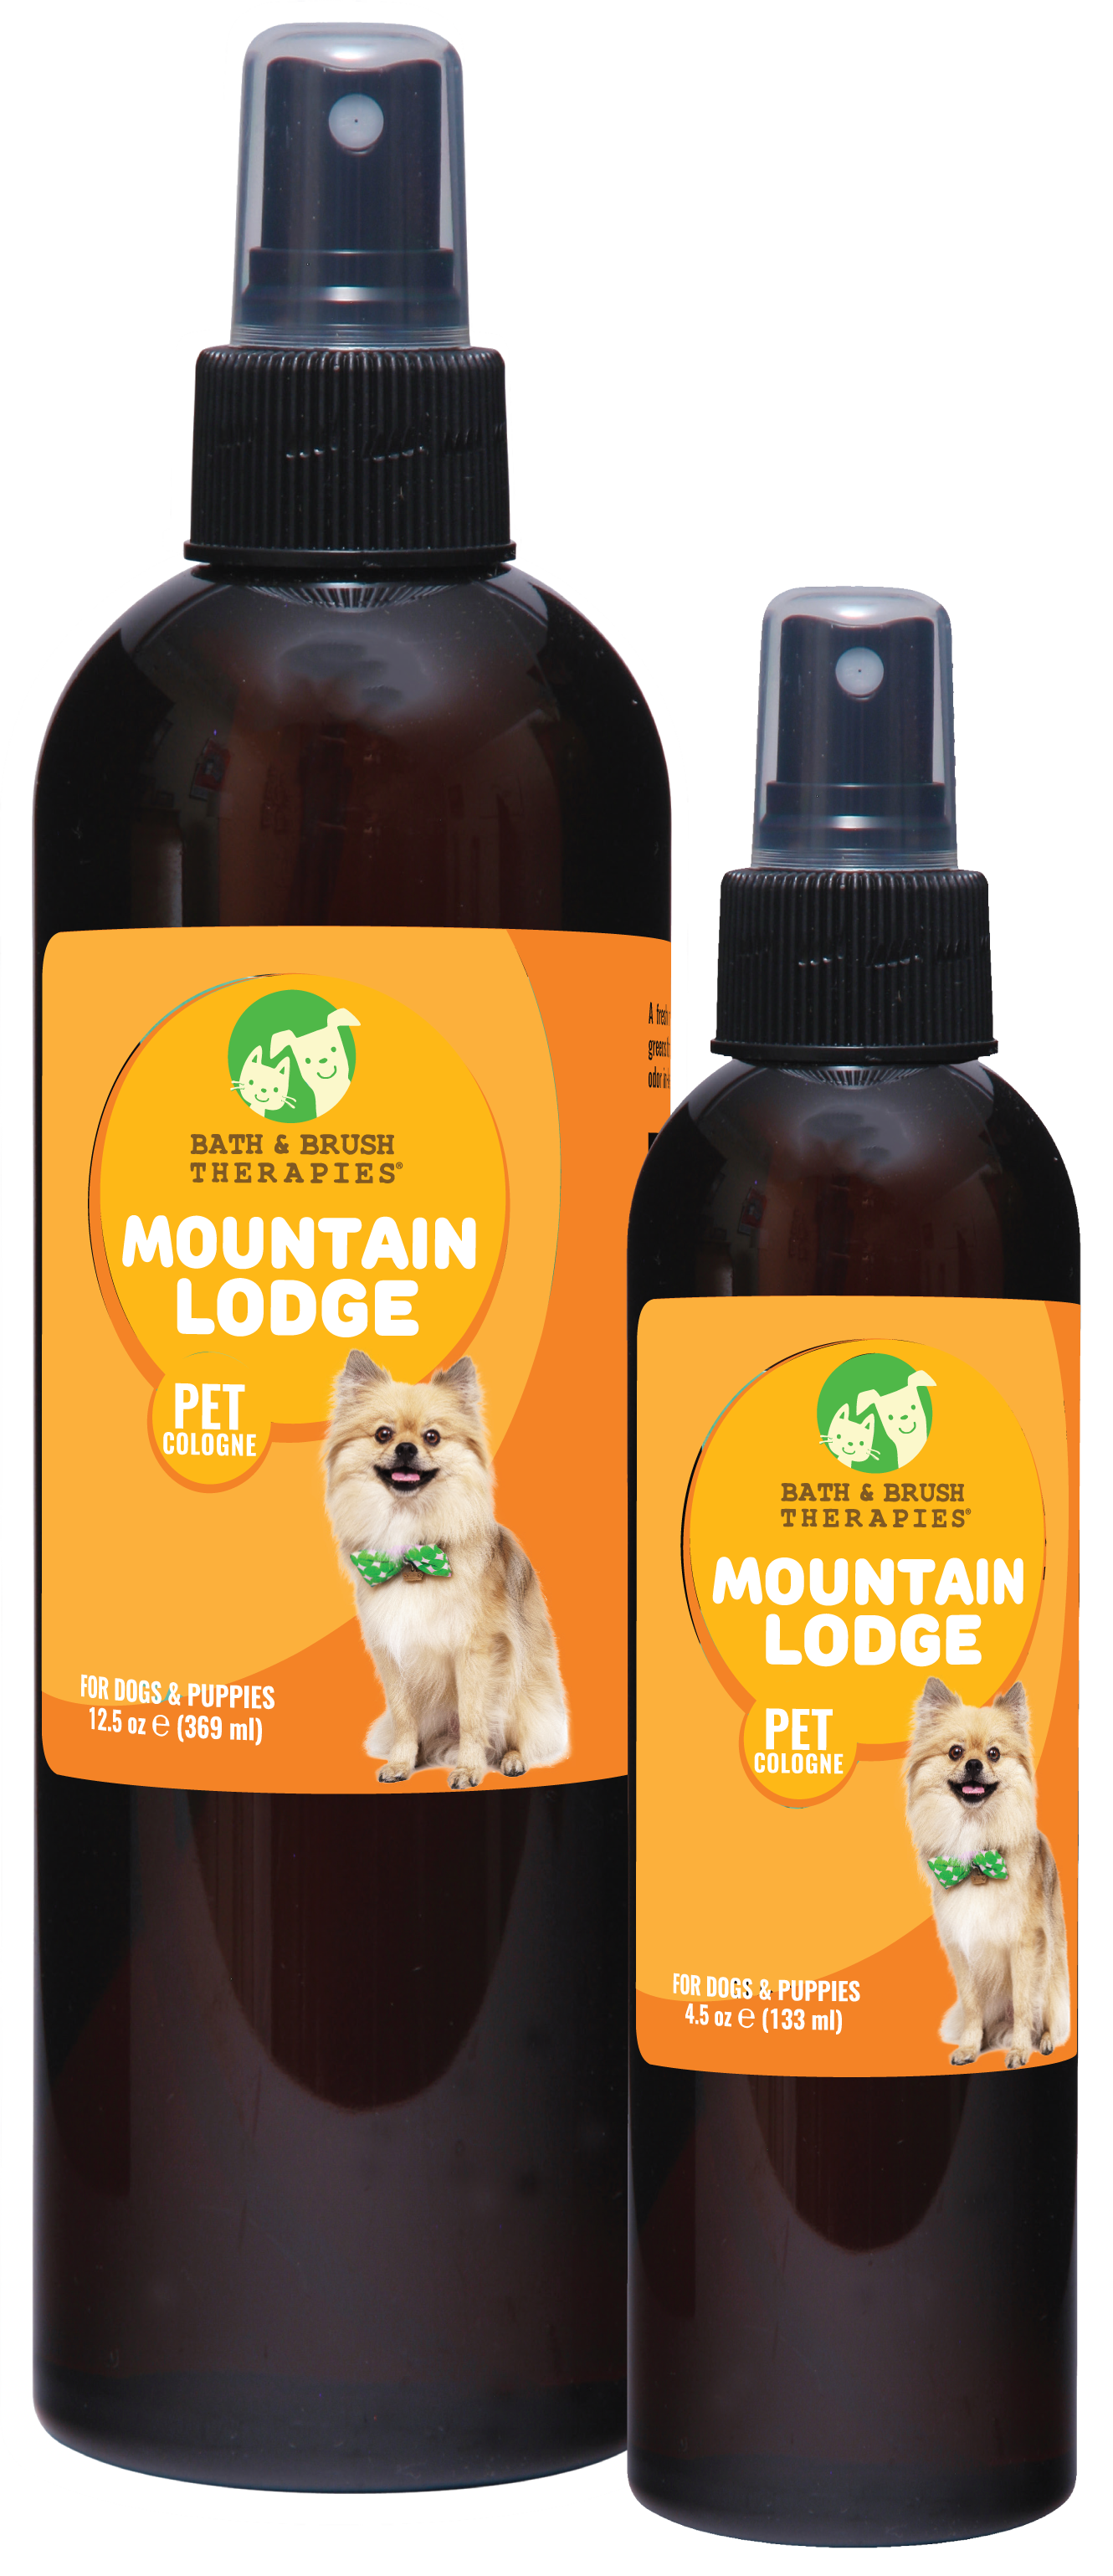 Bath & Brush Therapies® Mountain Lodge Pet Cologne